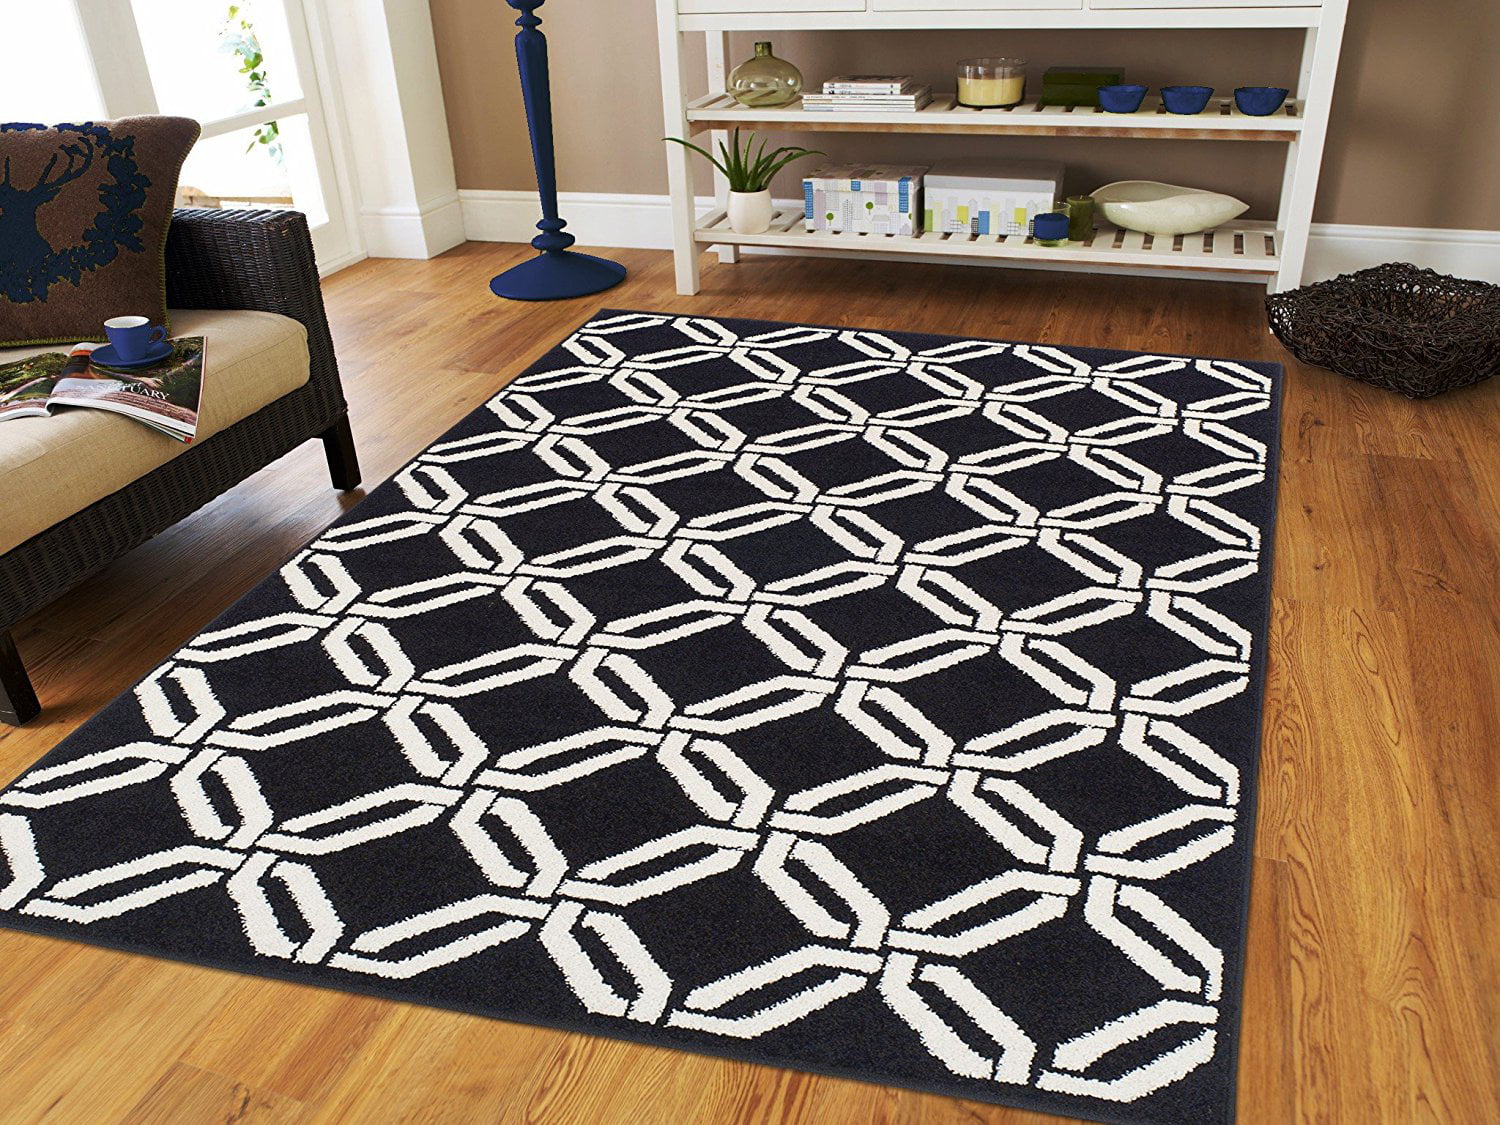 5x7 rug in living room